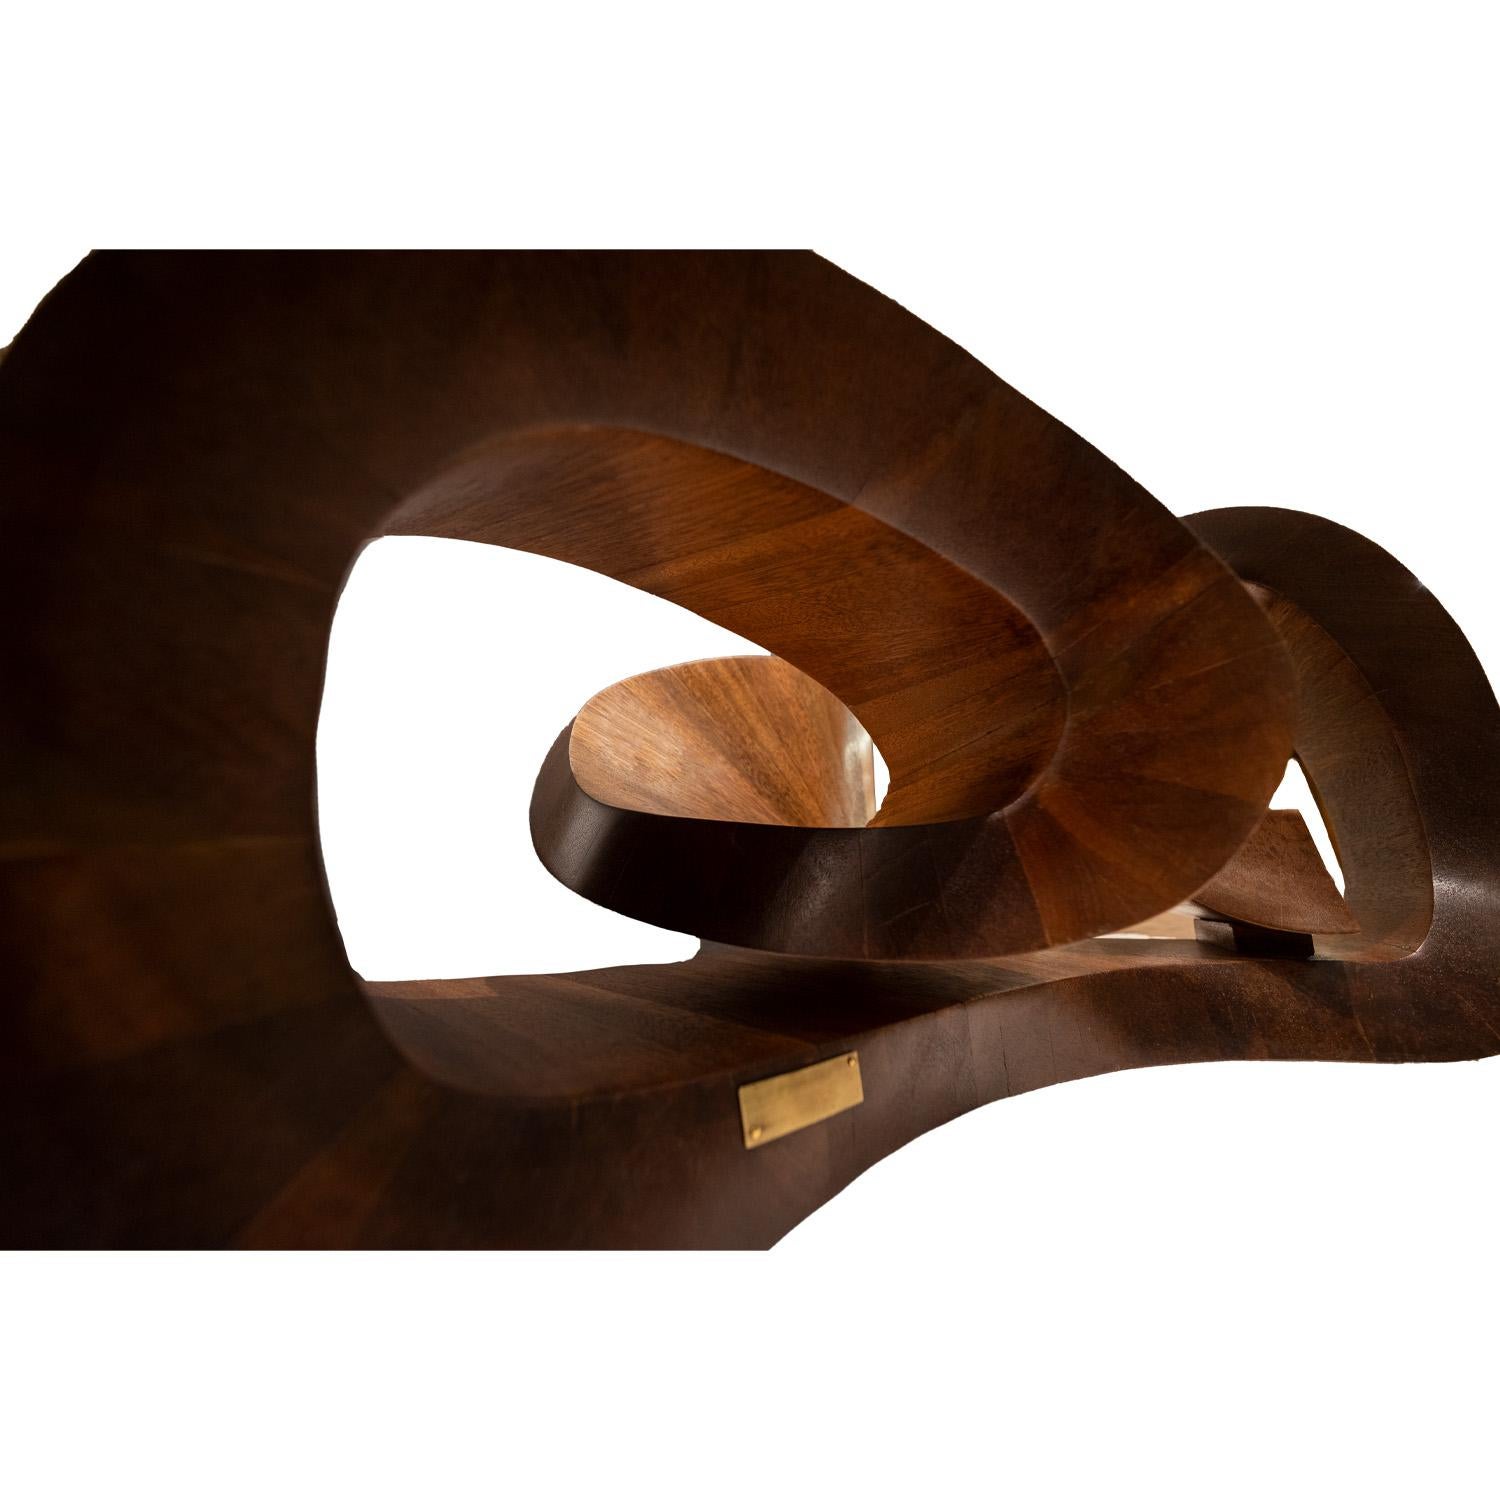 Mid-20th Century Philip LaVerne Rare Unique Sweeping Sculpture Coffee Table 1966 'Signed'